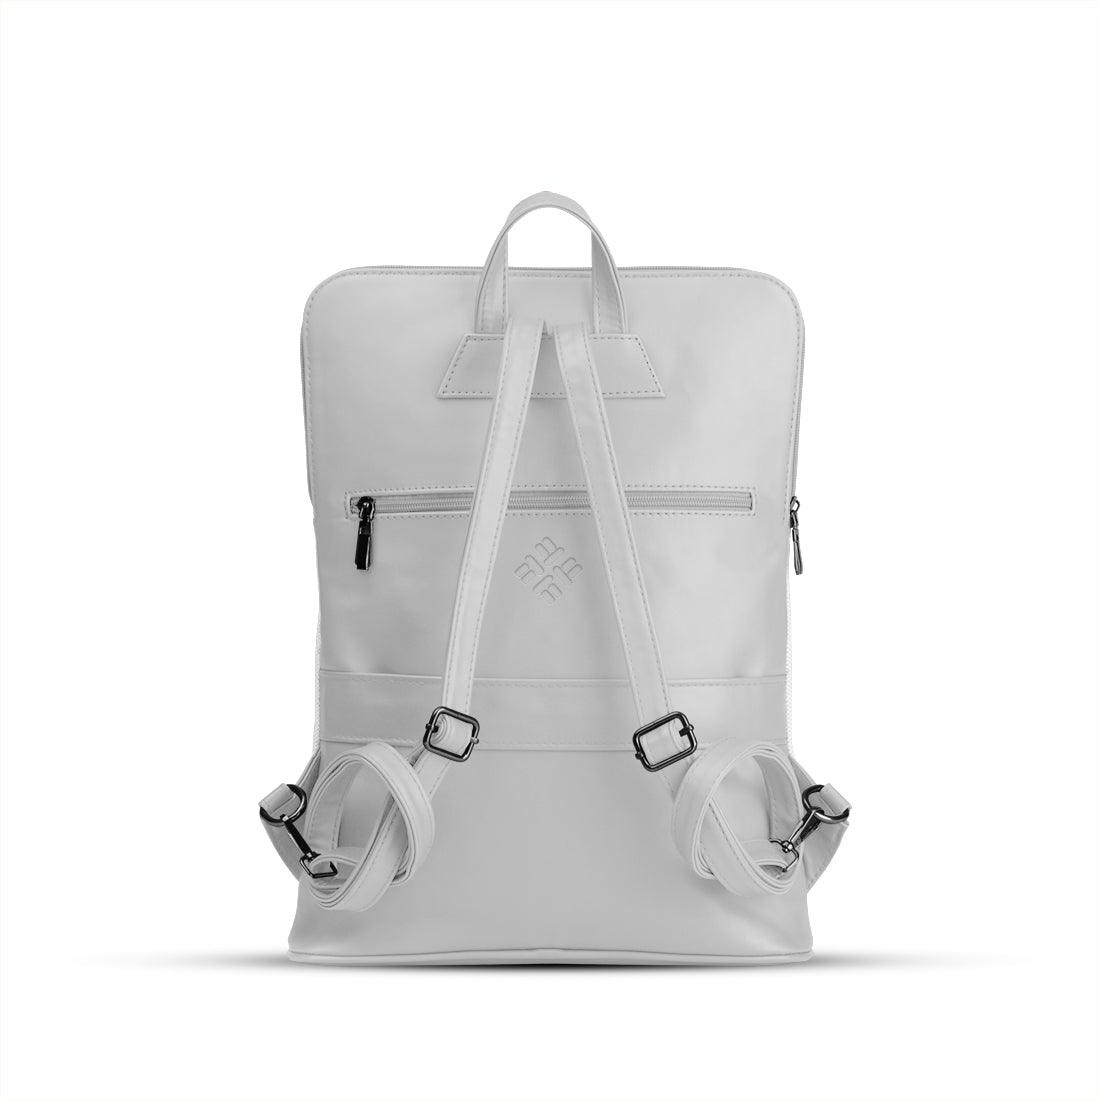 White Orbit Laptop Backpack Baby Bird - CANVAEGYPT